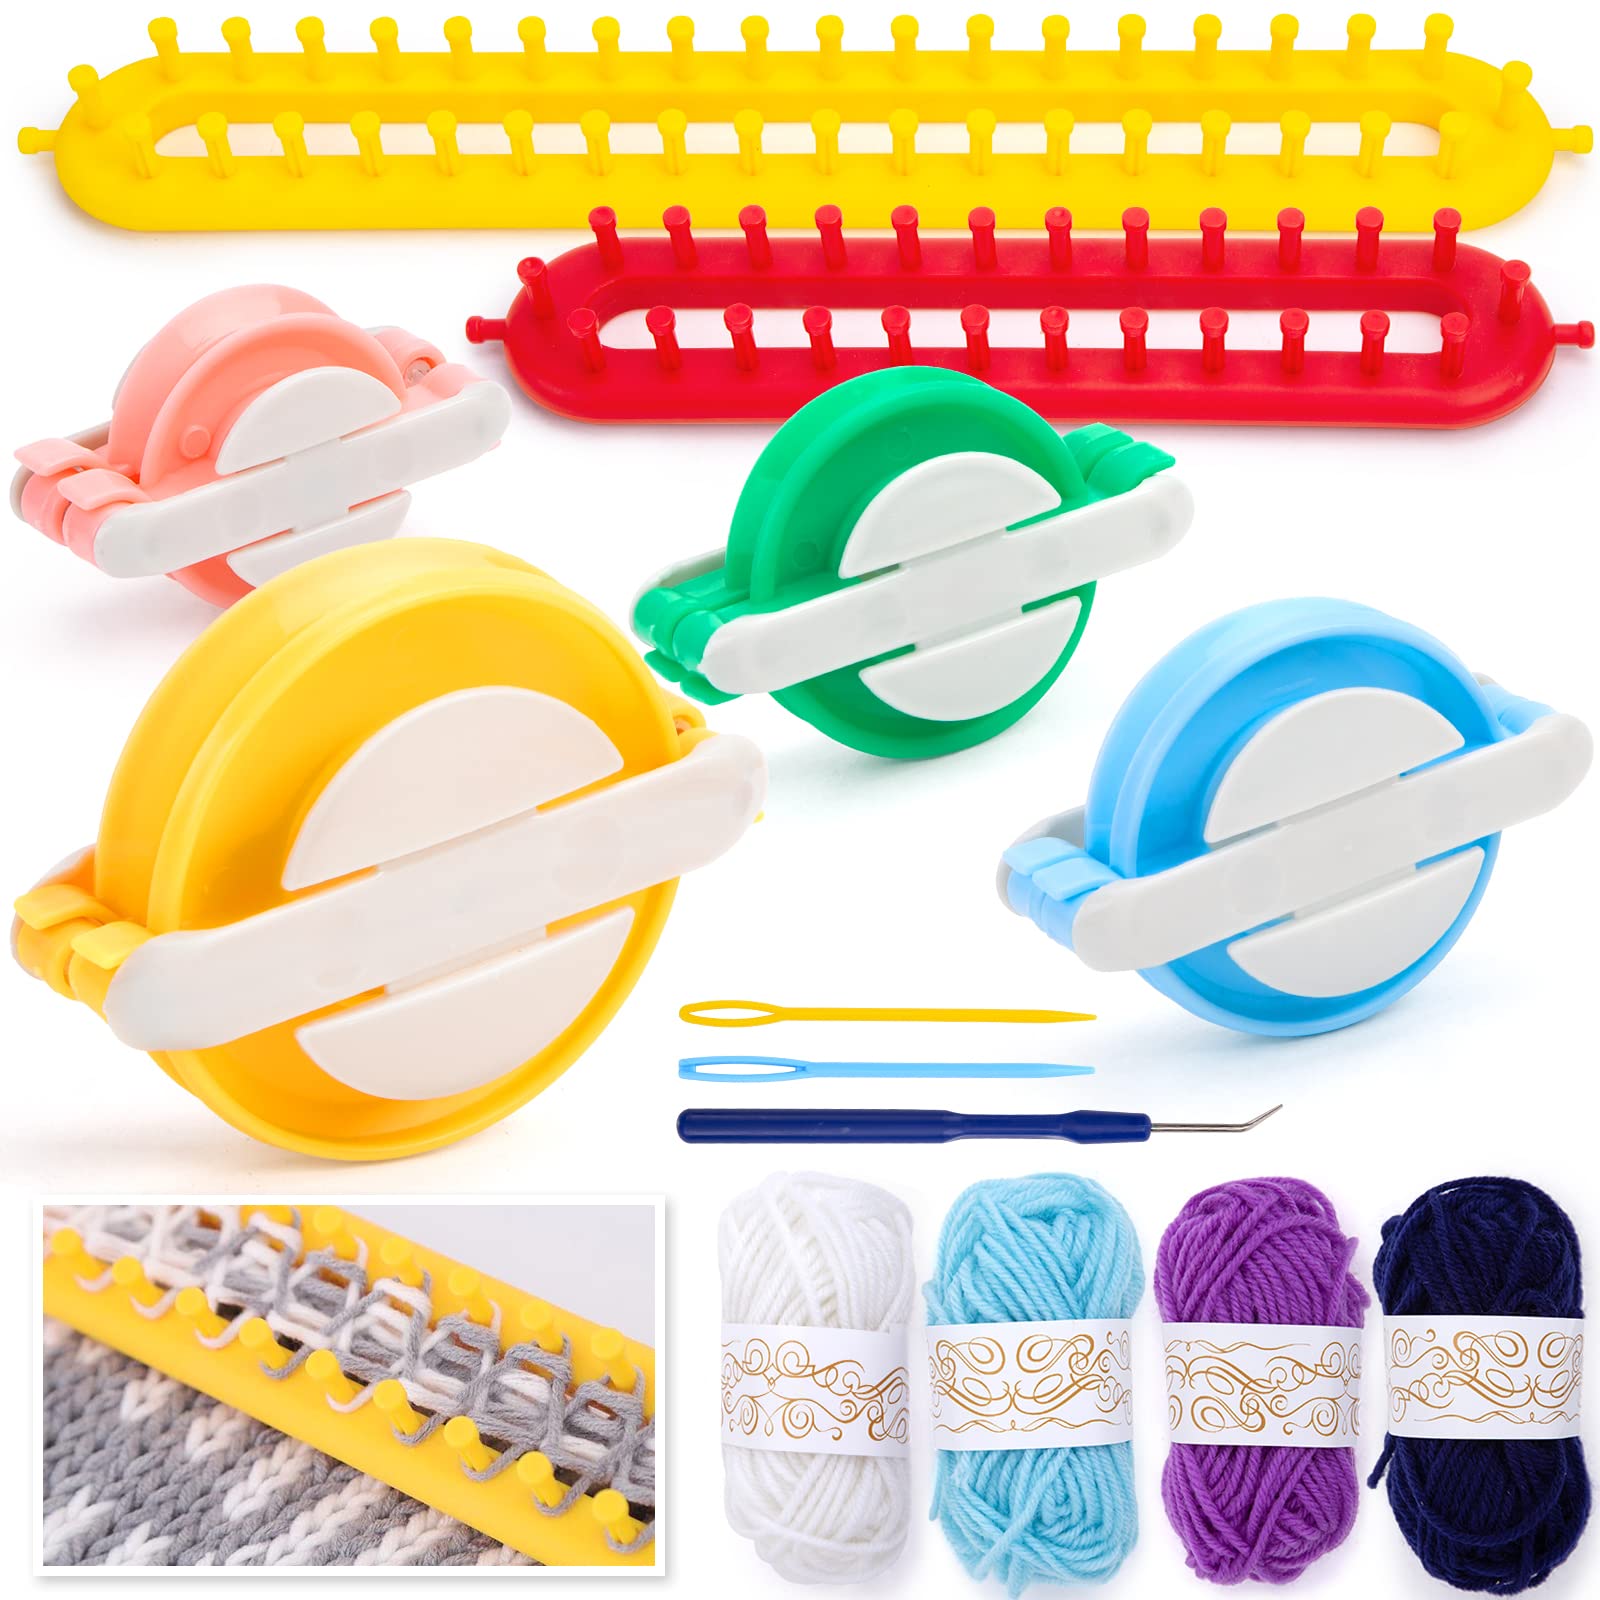 Frola Knitting Loom Craft Kit Round Knitting Loom -Include Hook Needle,  Pompom Maker